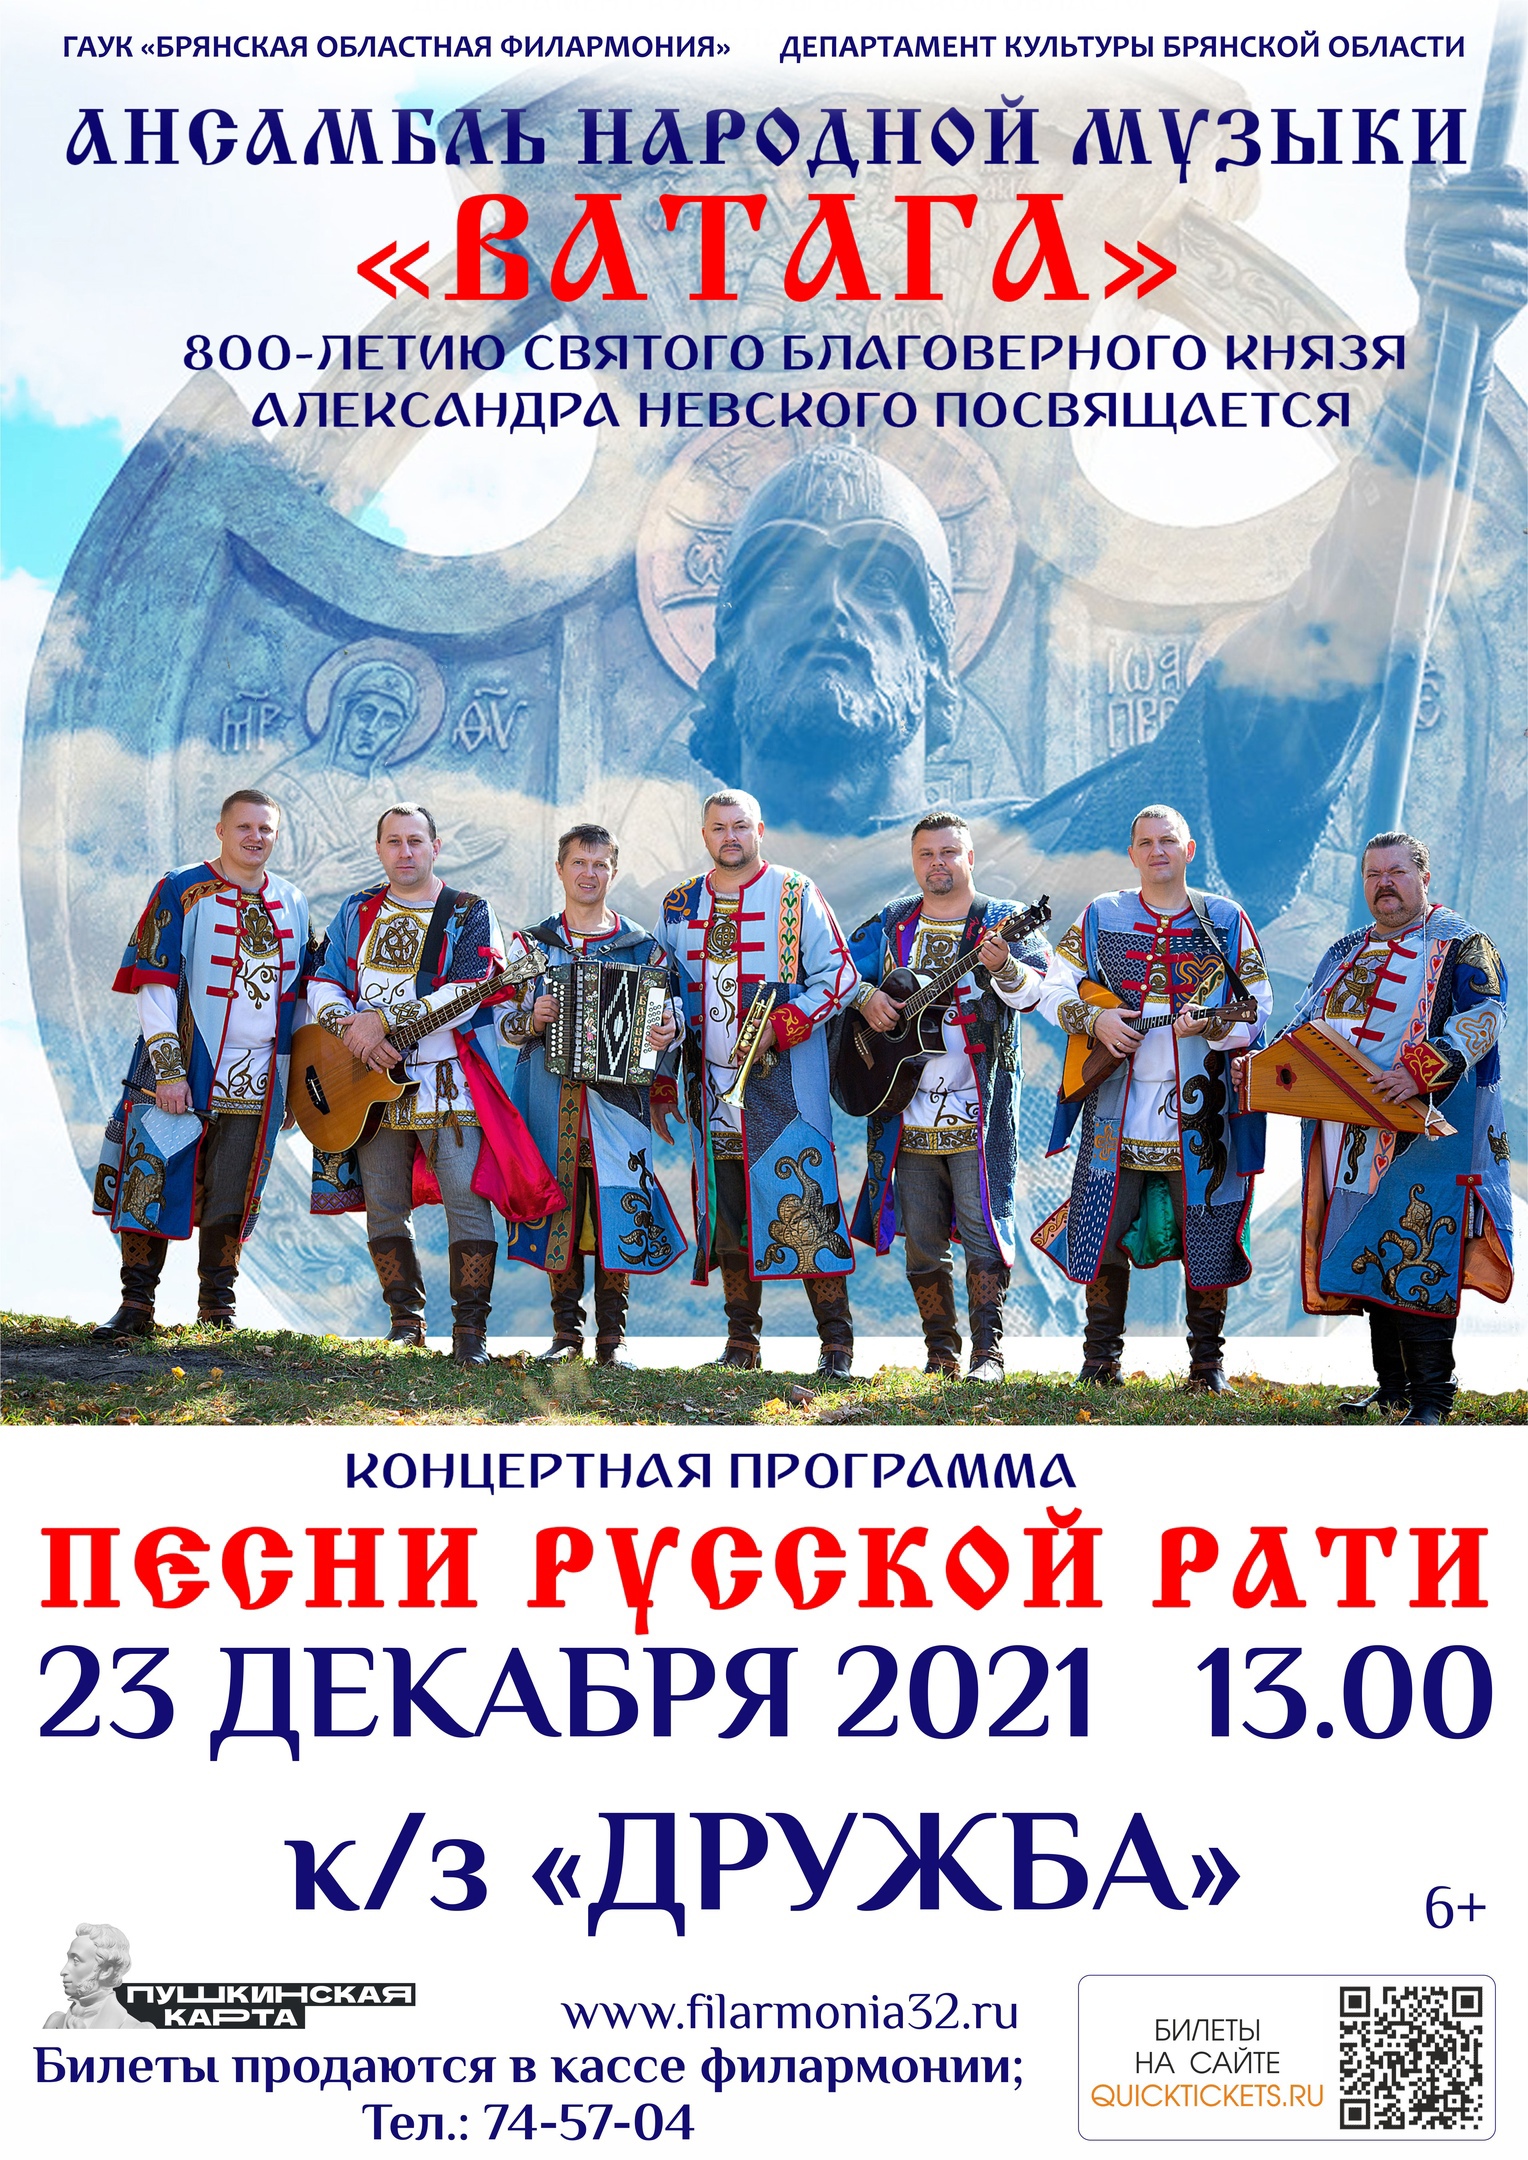 Брянцев приглашают на концертную  программу «Песни русской рати»